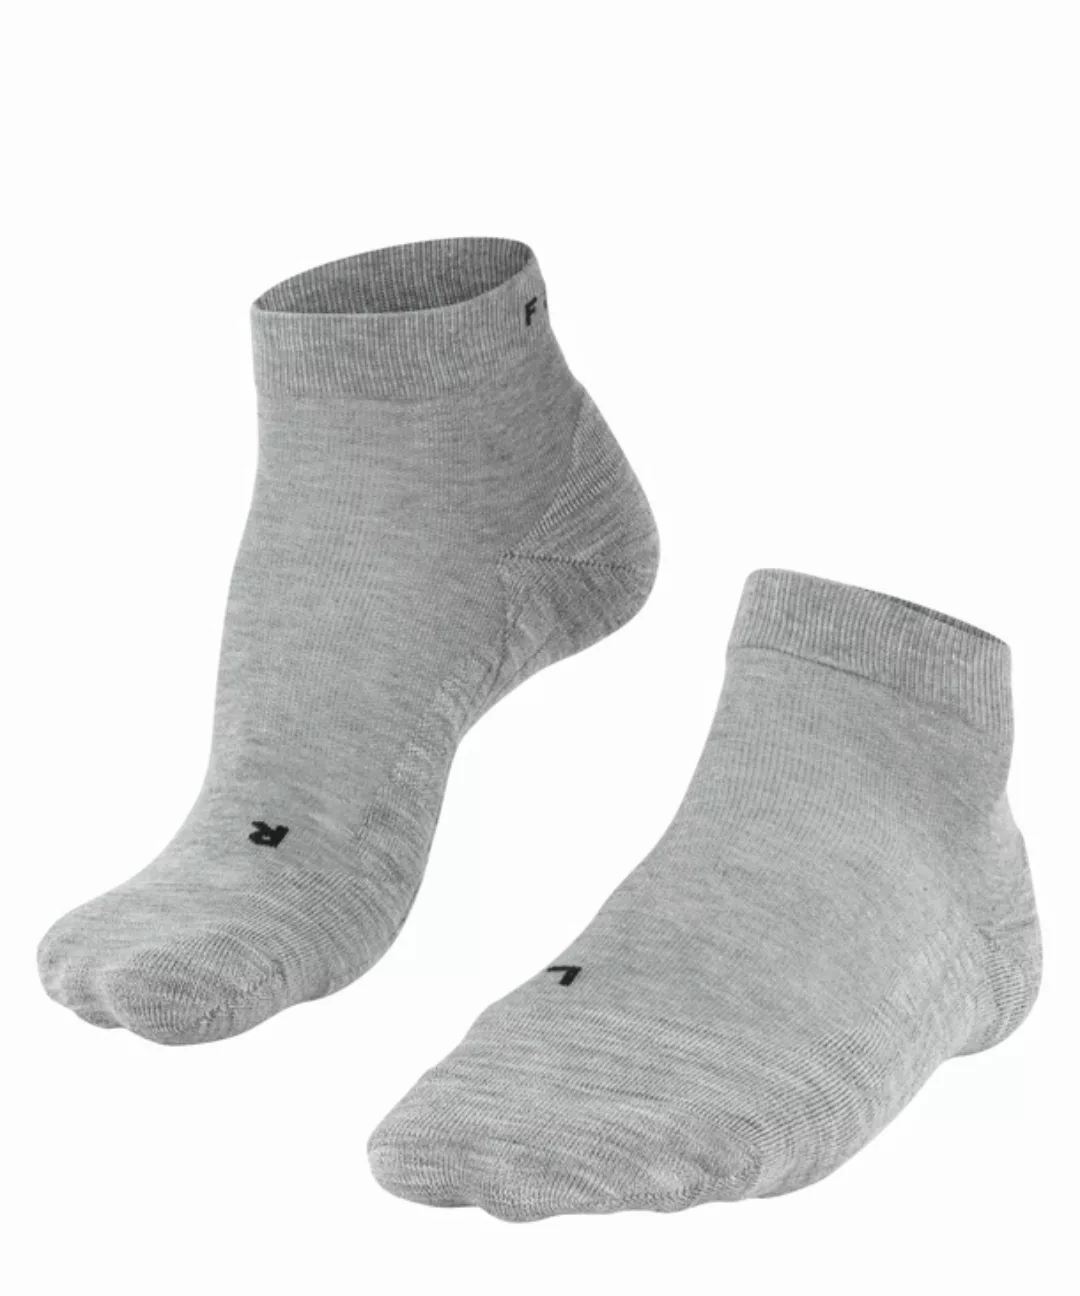 FALKE GO2 Short Damen Golf Socken, 35-36, Grau, Baumwolle, 16780-340001 günstig online kaufen